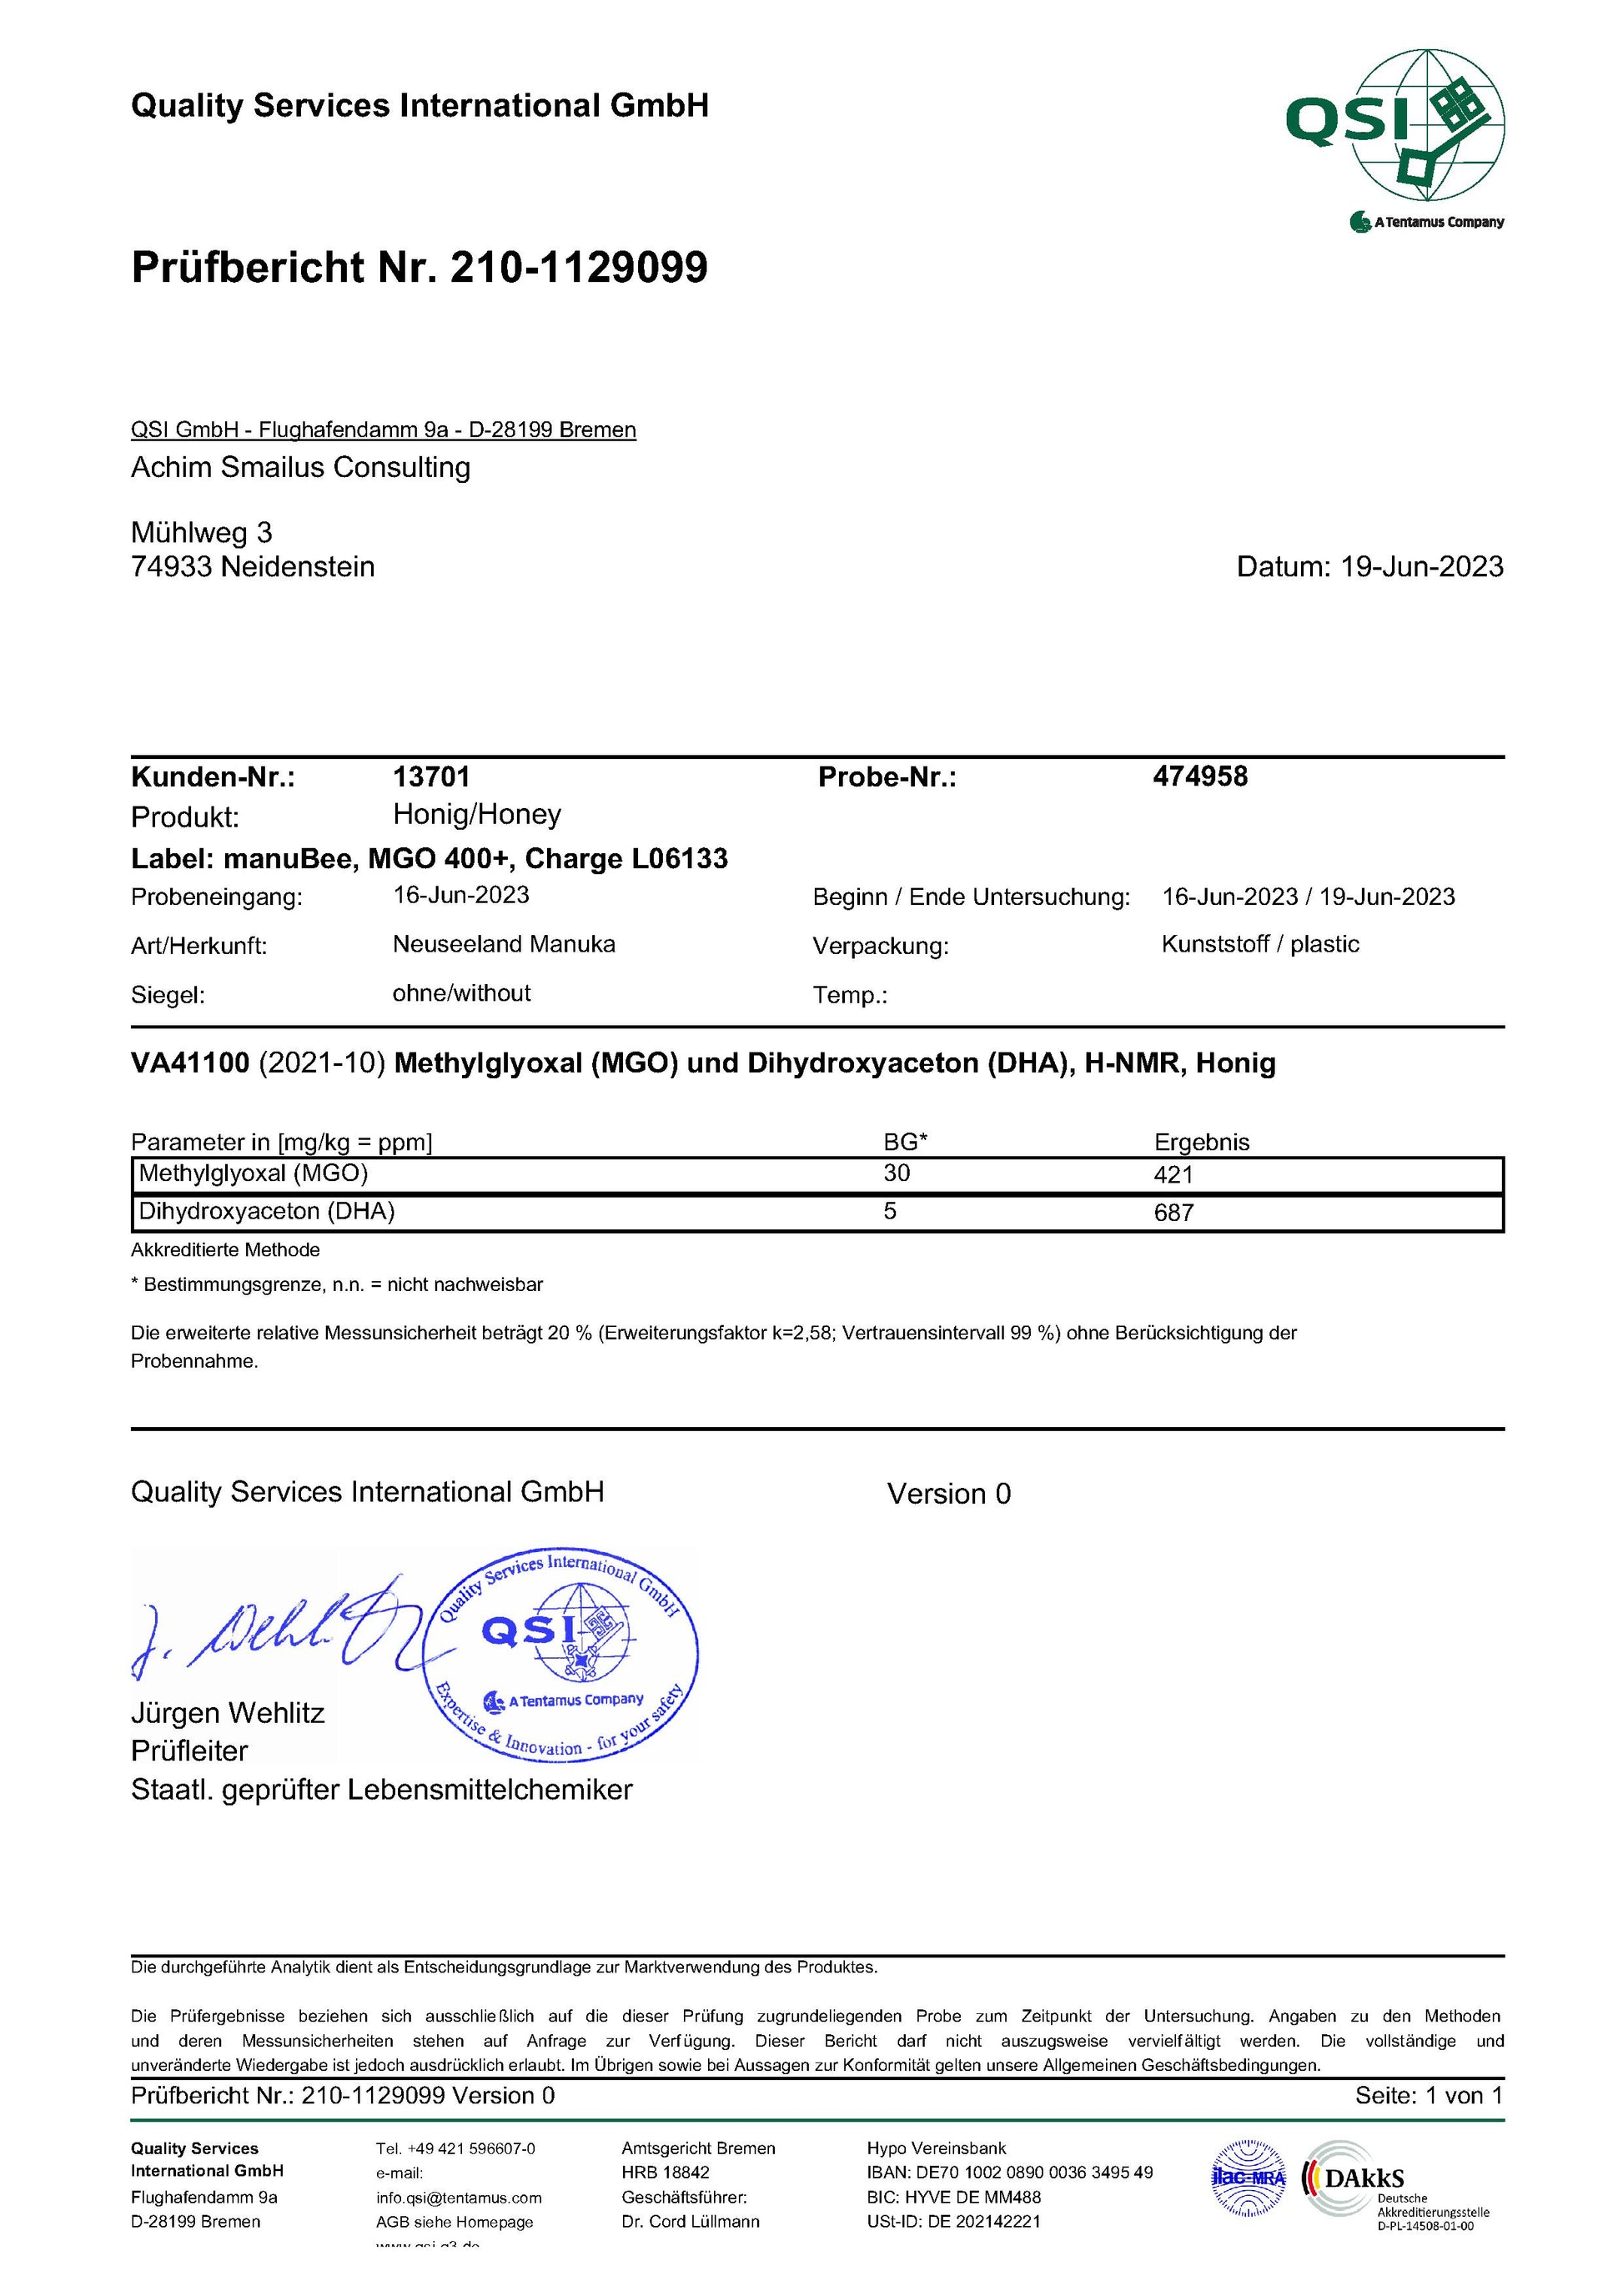 Manuka Honig Zertifikat MGO 400+